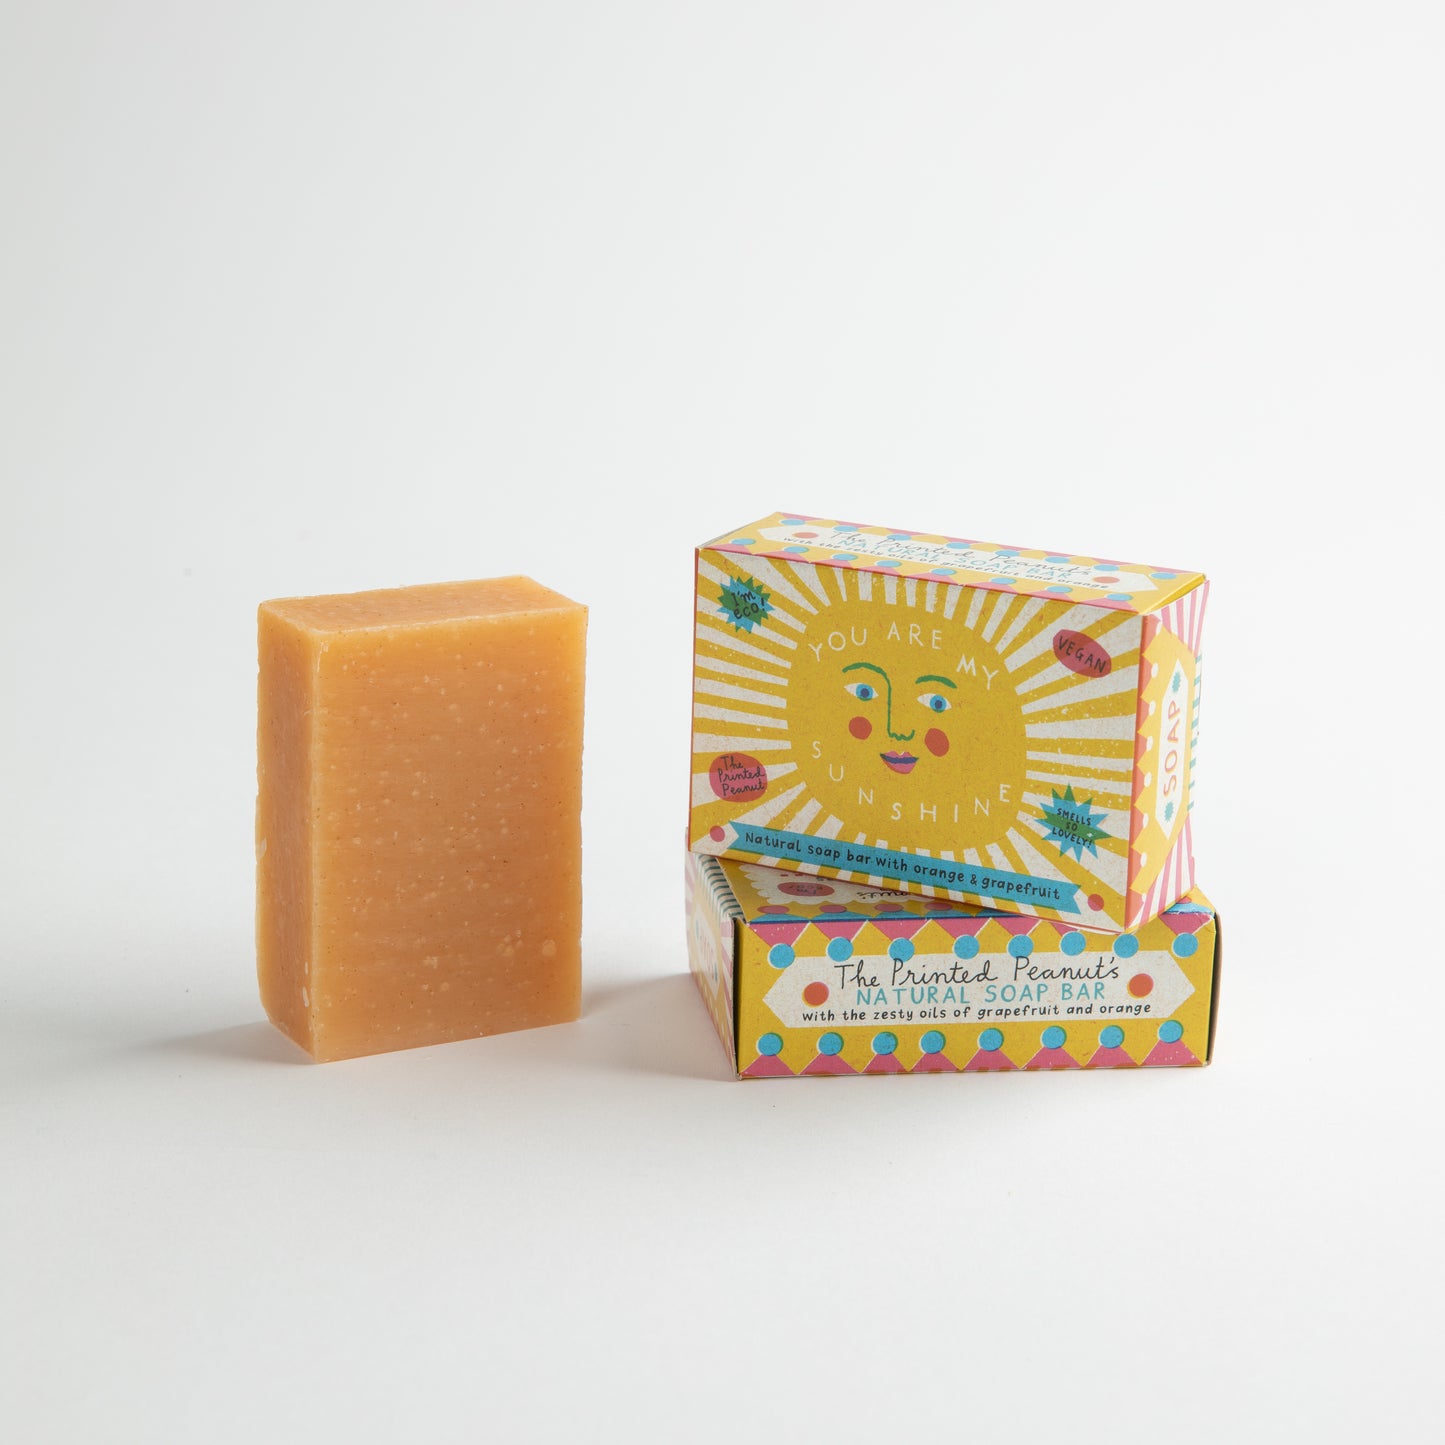 The Printed Peanut Soap Sunshine Orange & Grapefruit Soap Bar